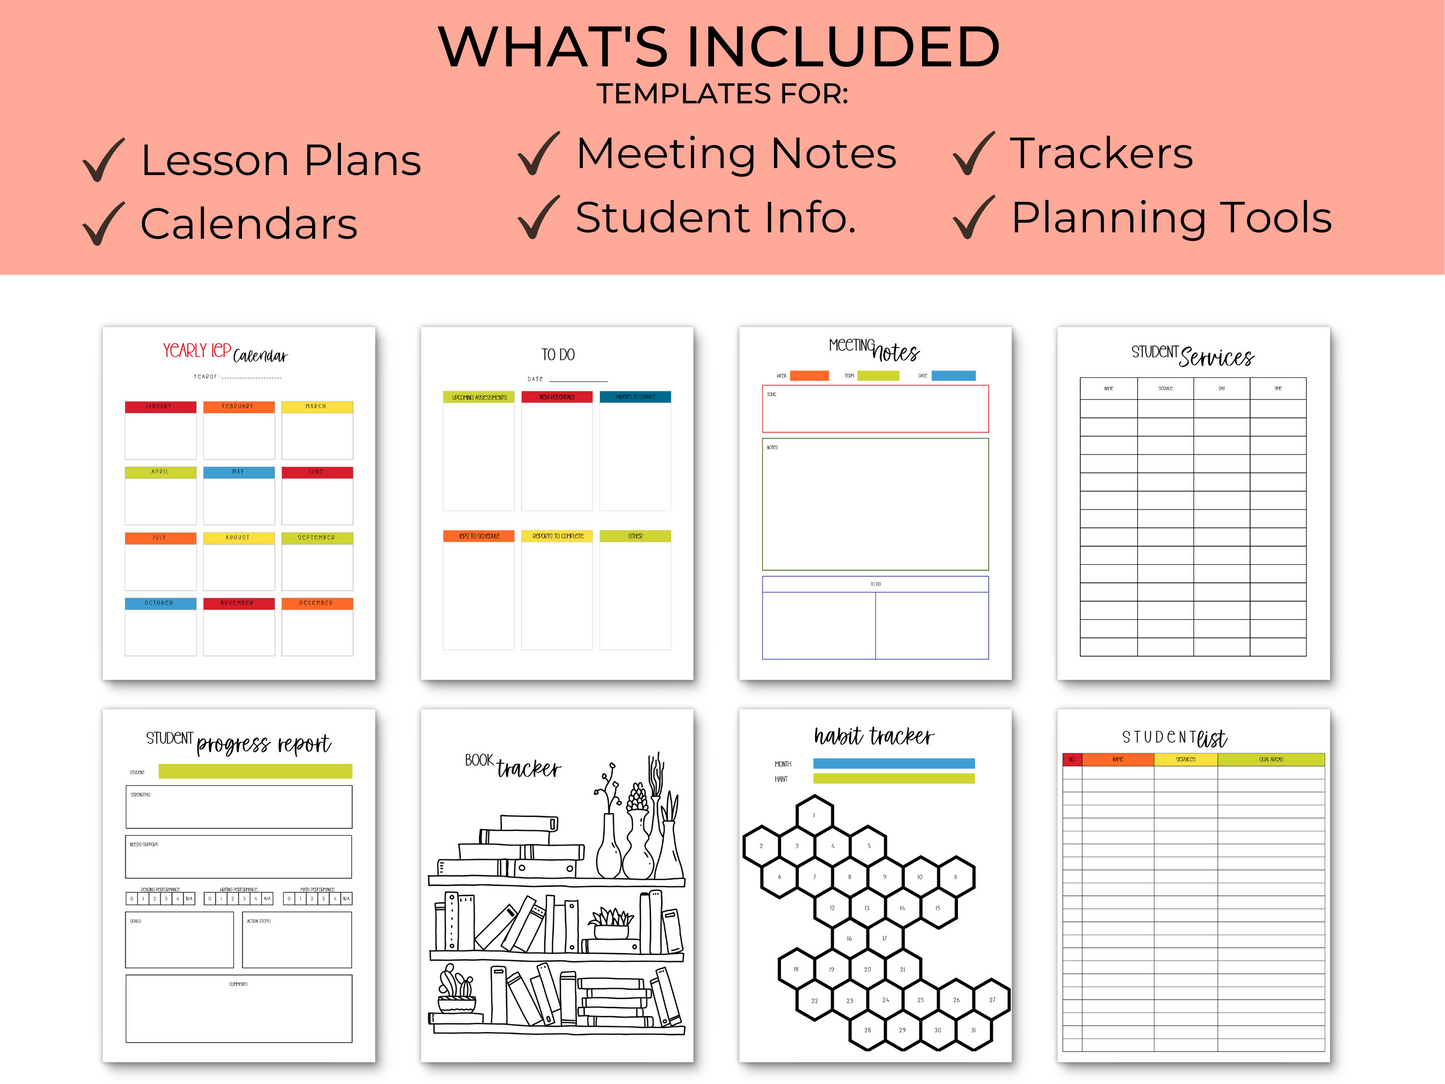 SpEd Teacher Printable Planner - Bright Floral Theme